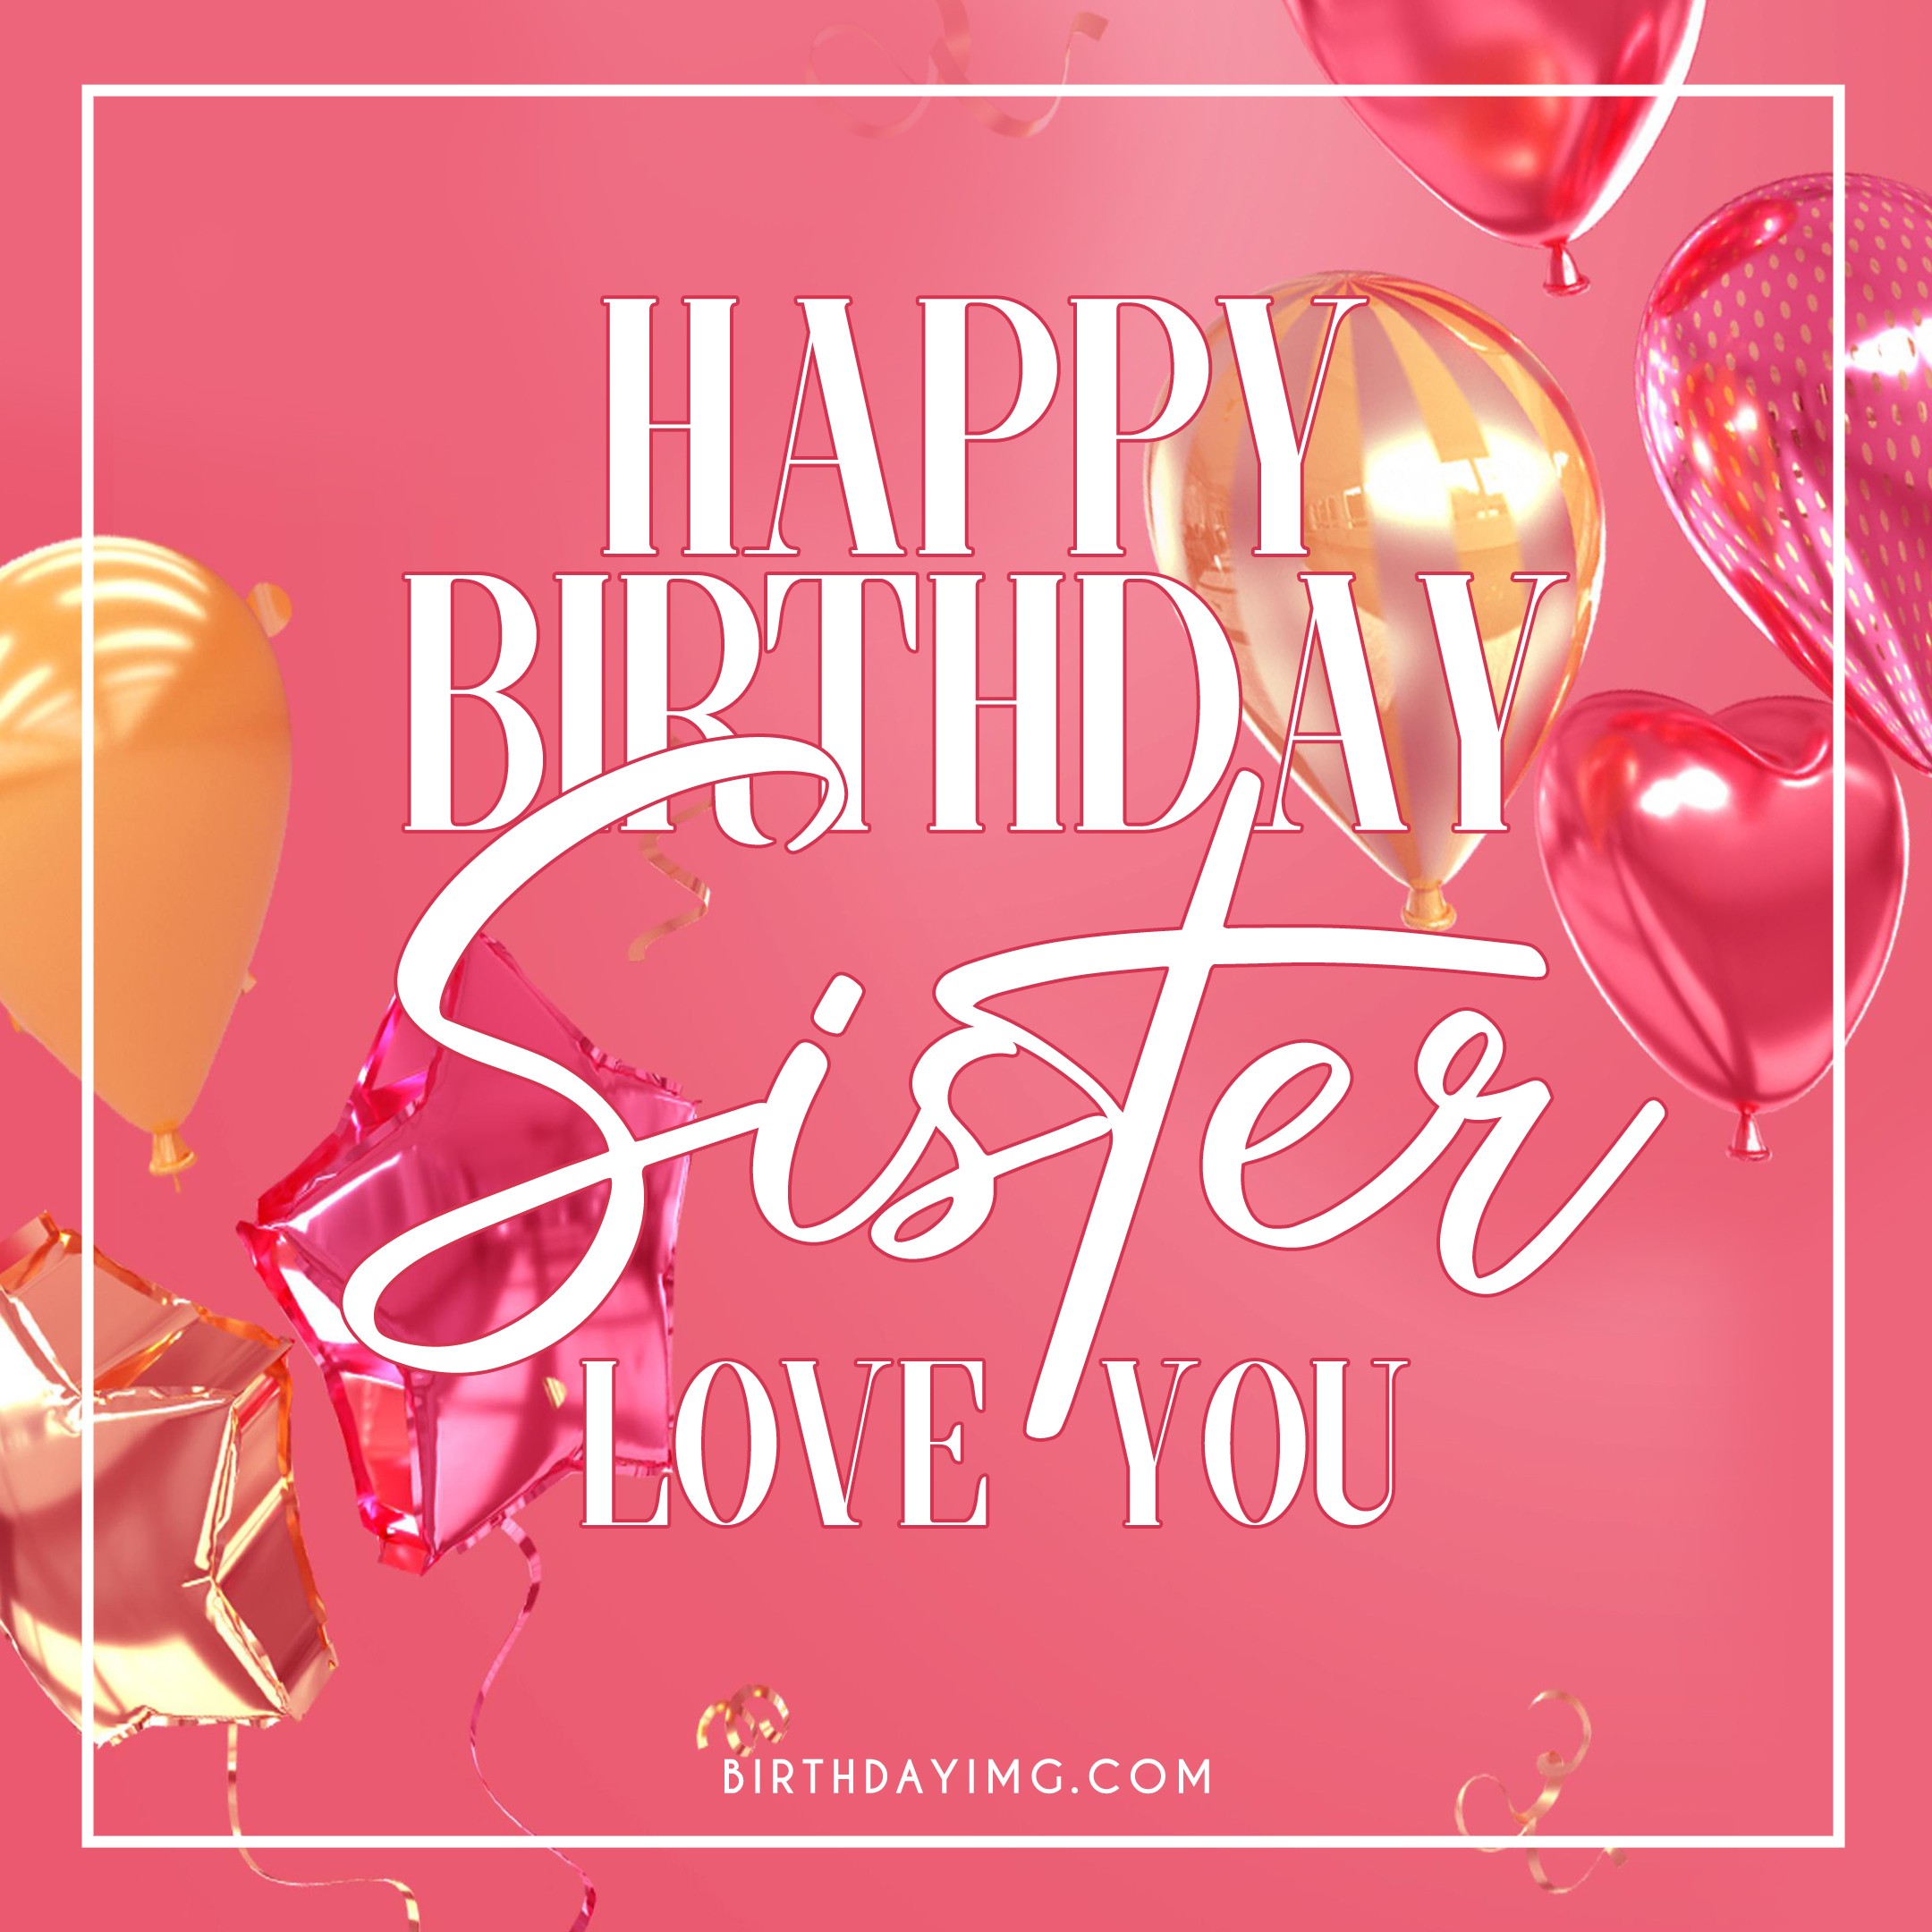 Free For Sister Happy Birthday Image Birthdayimg